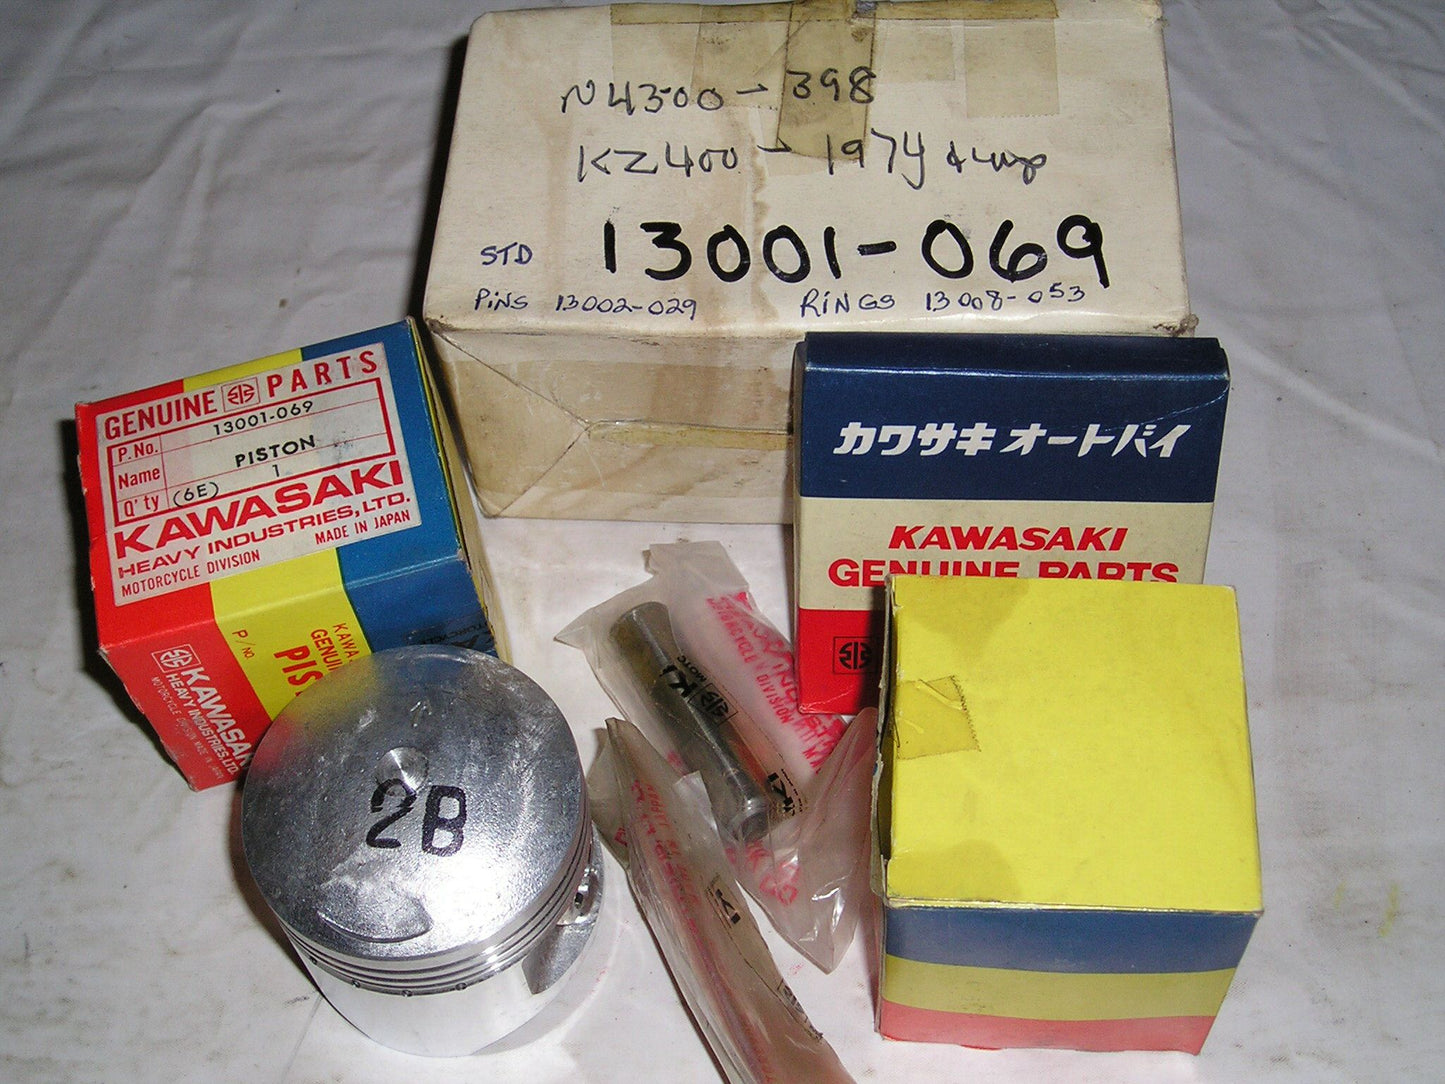 KAWASAKI KZ400 1974-1977 Piston Kit Standard 13001-069